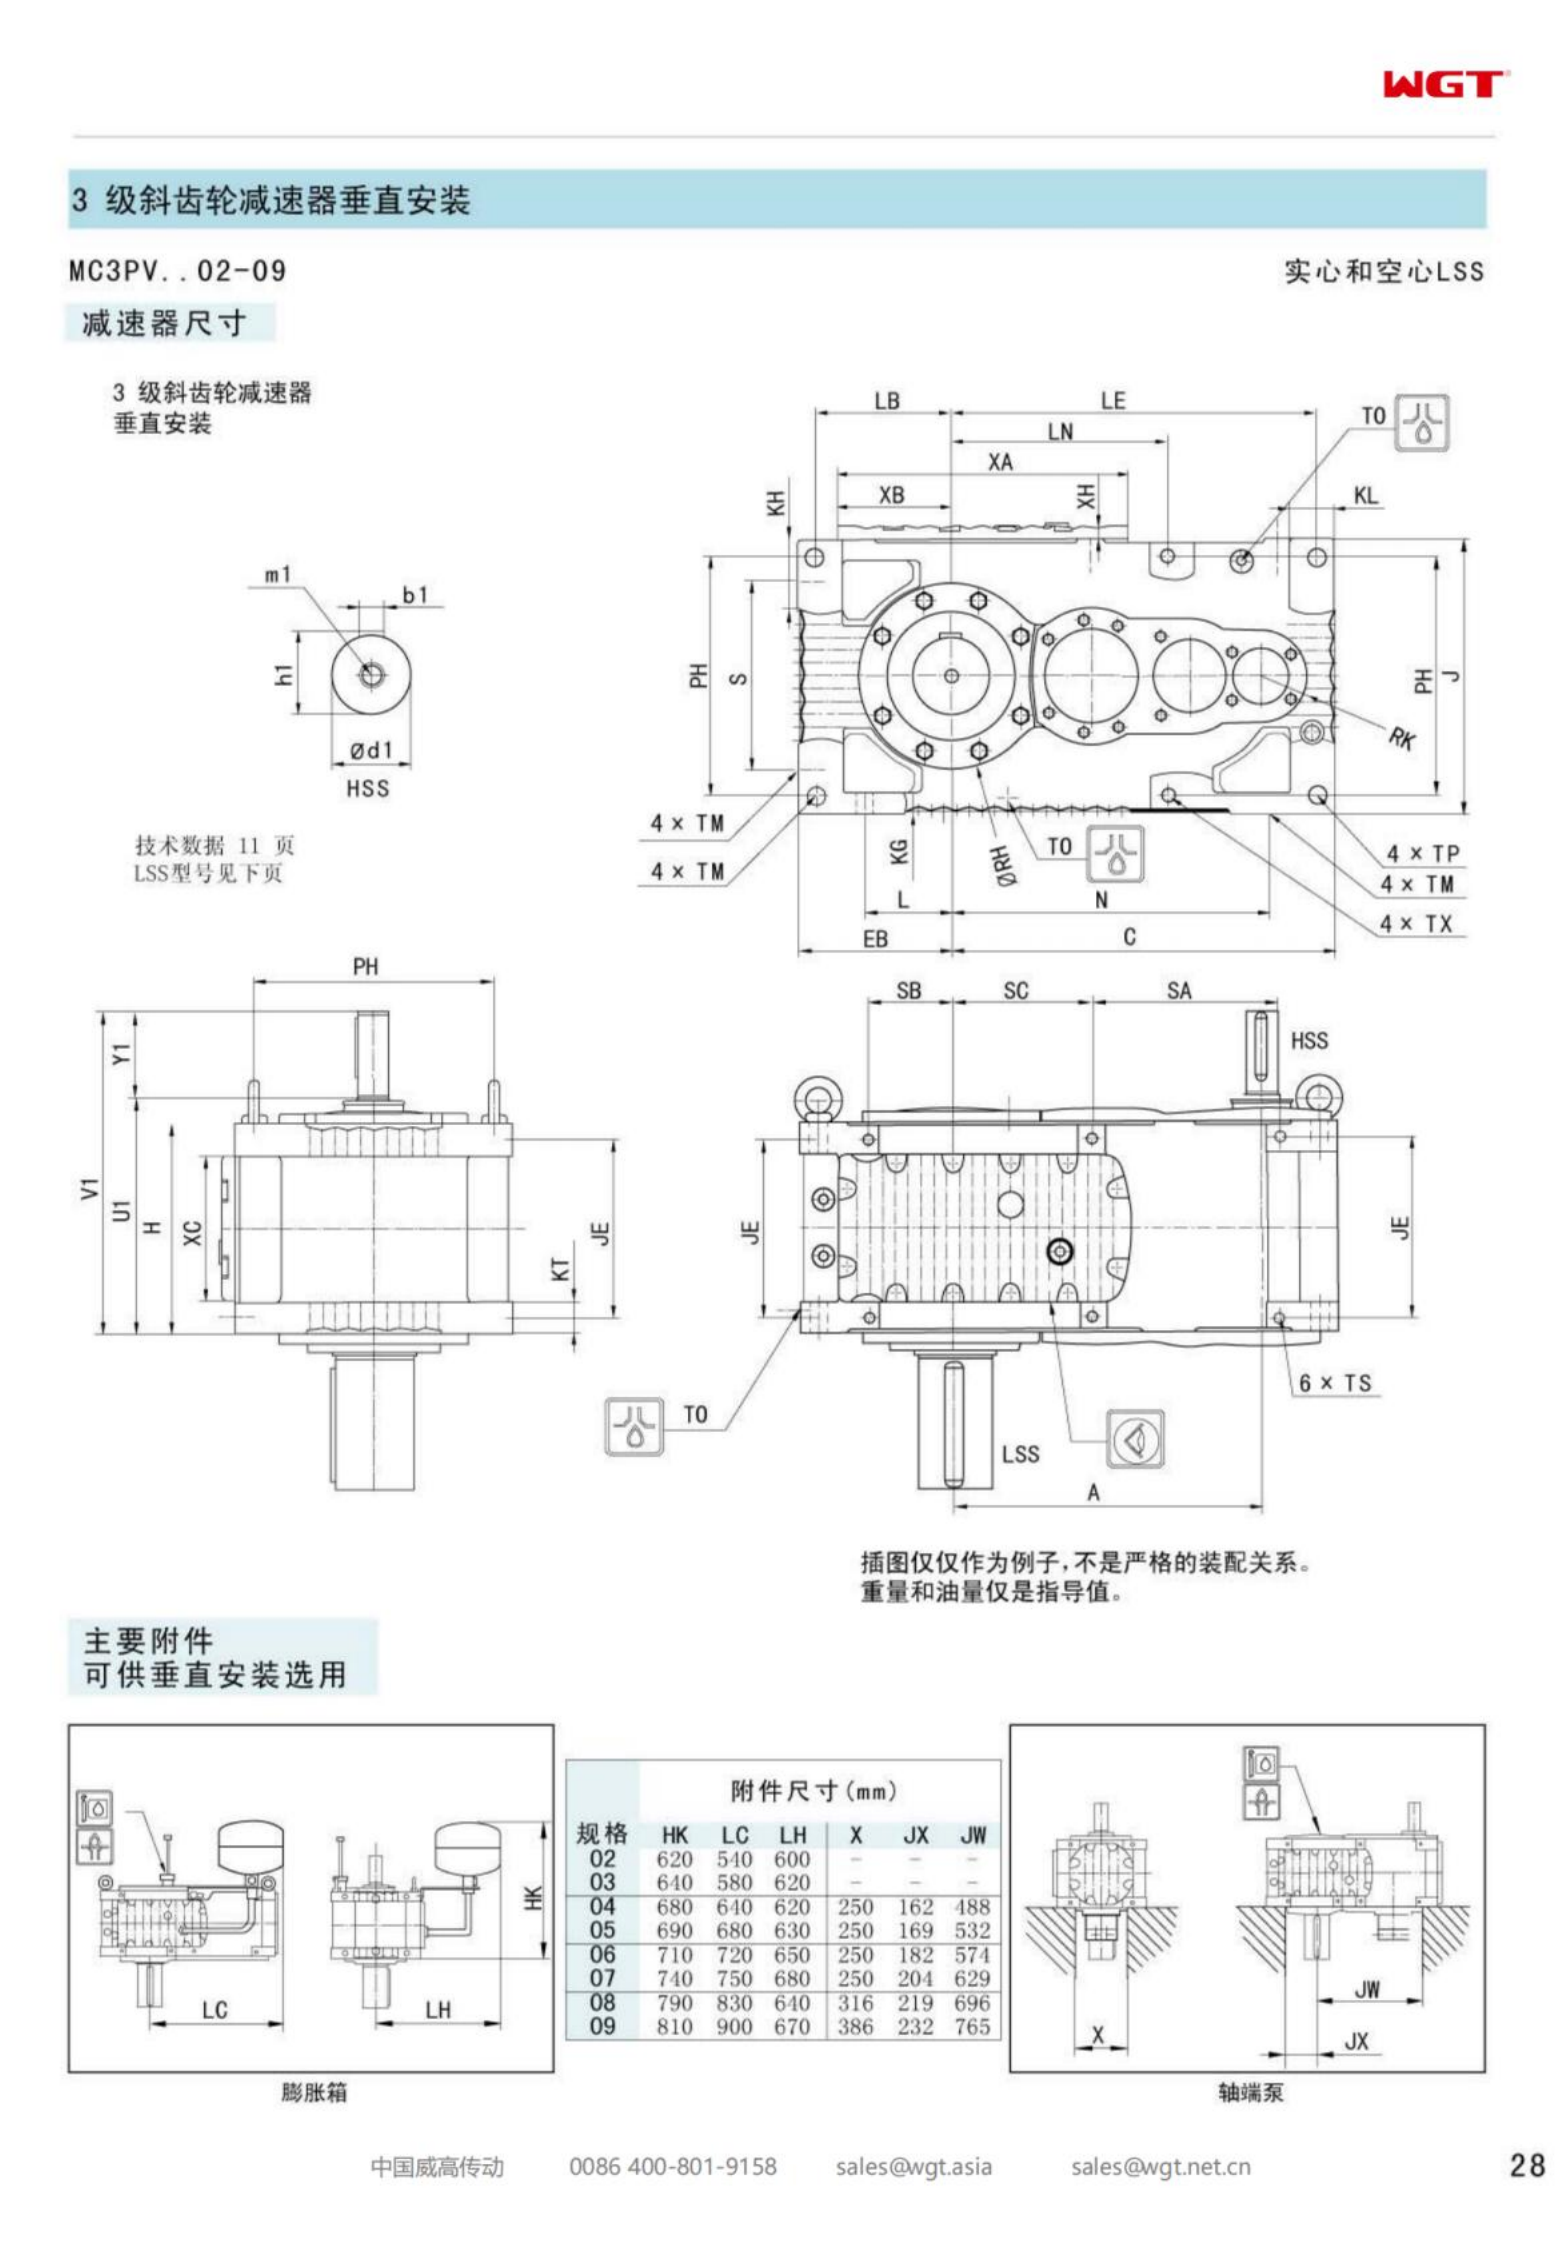 MC3PVSF08 replaces _SEW_MC_Series gearbox (patent)